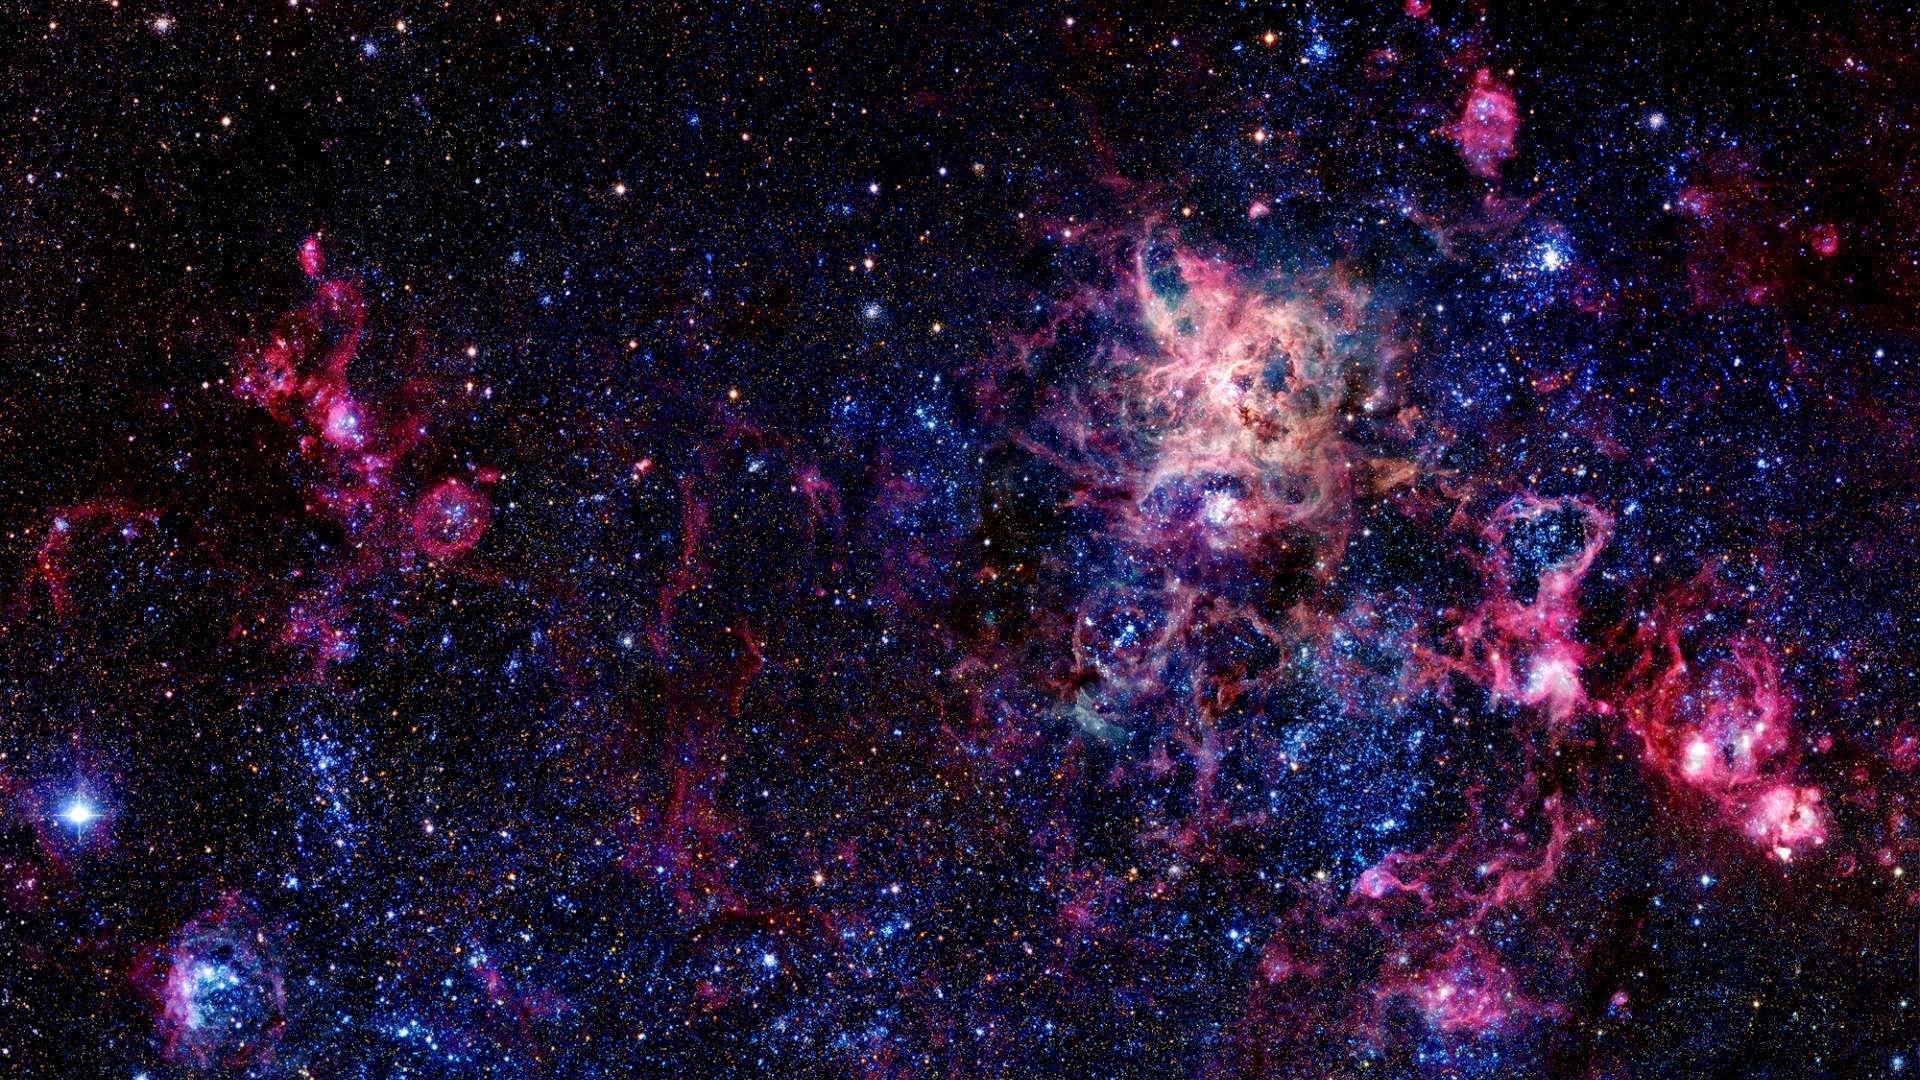 Download wallpaper 7680x4320 planet, nebula, galaxy, fantasy, art 8k  wallpaper, 7680x4320 8k background, 20363